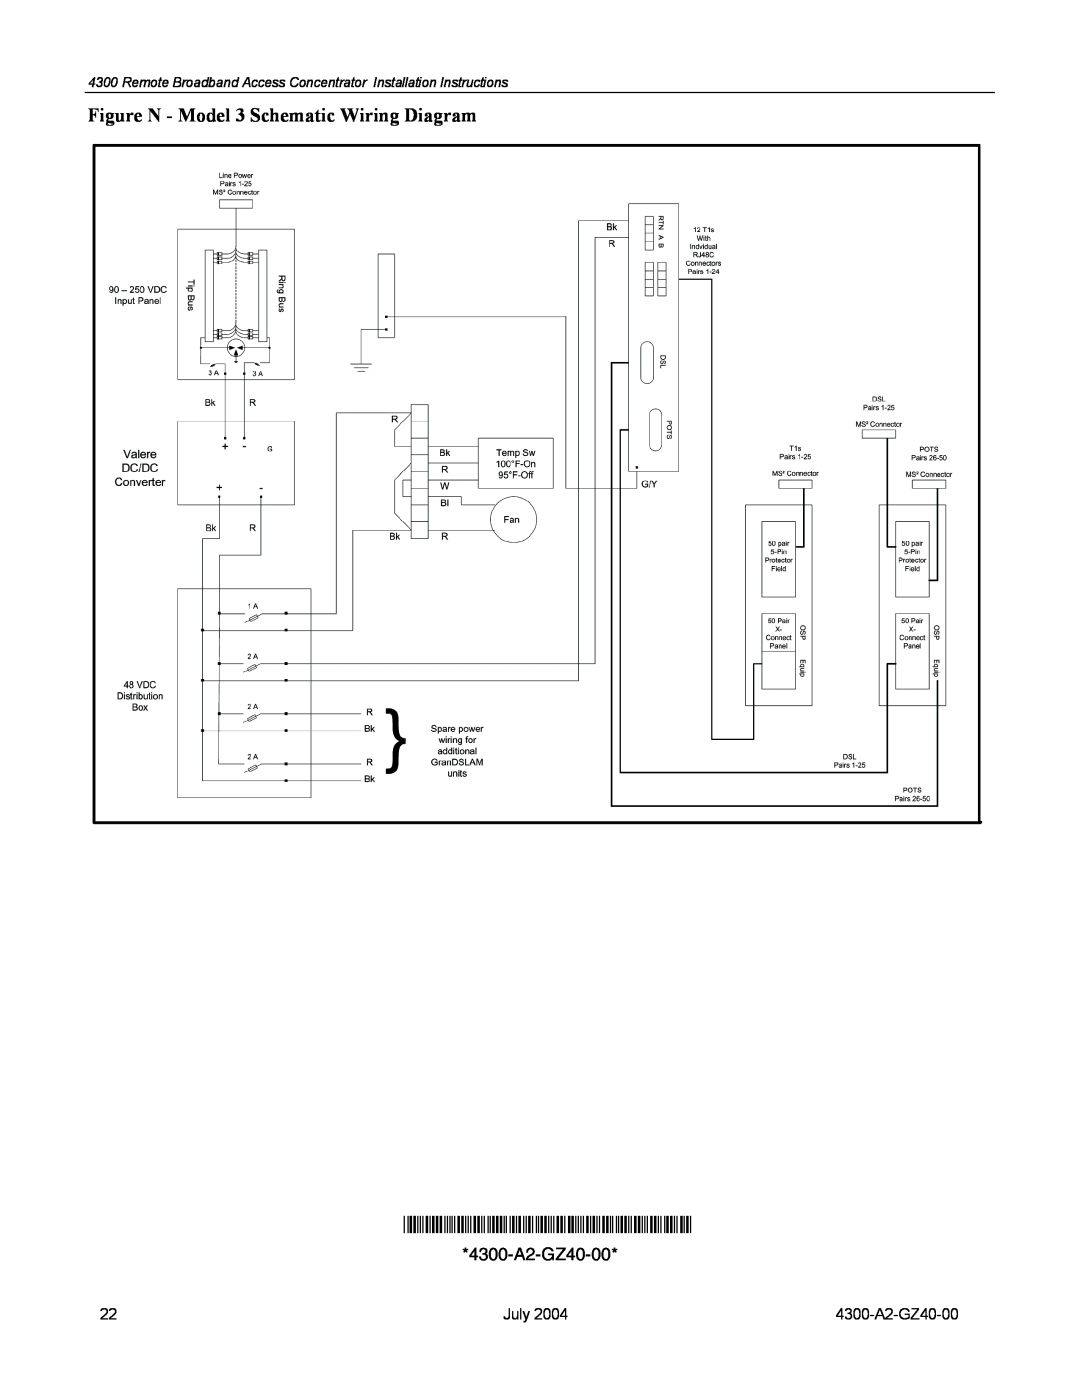 Paradyne installation instructions 4300-A2-GZ40-00, Figure N - Model 3 Schematic Wiring Diagram, July 